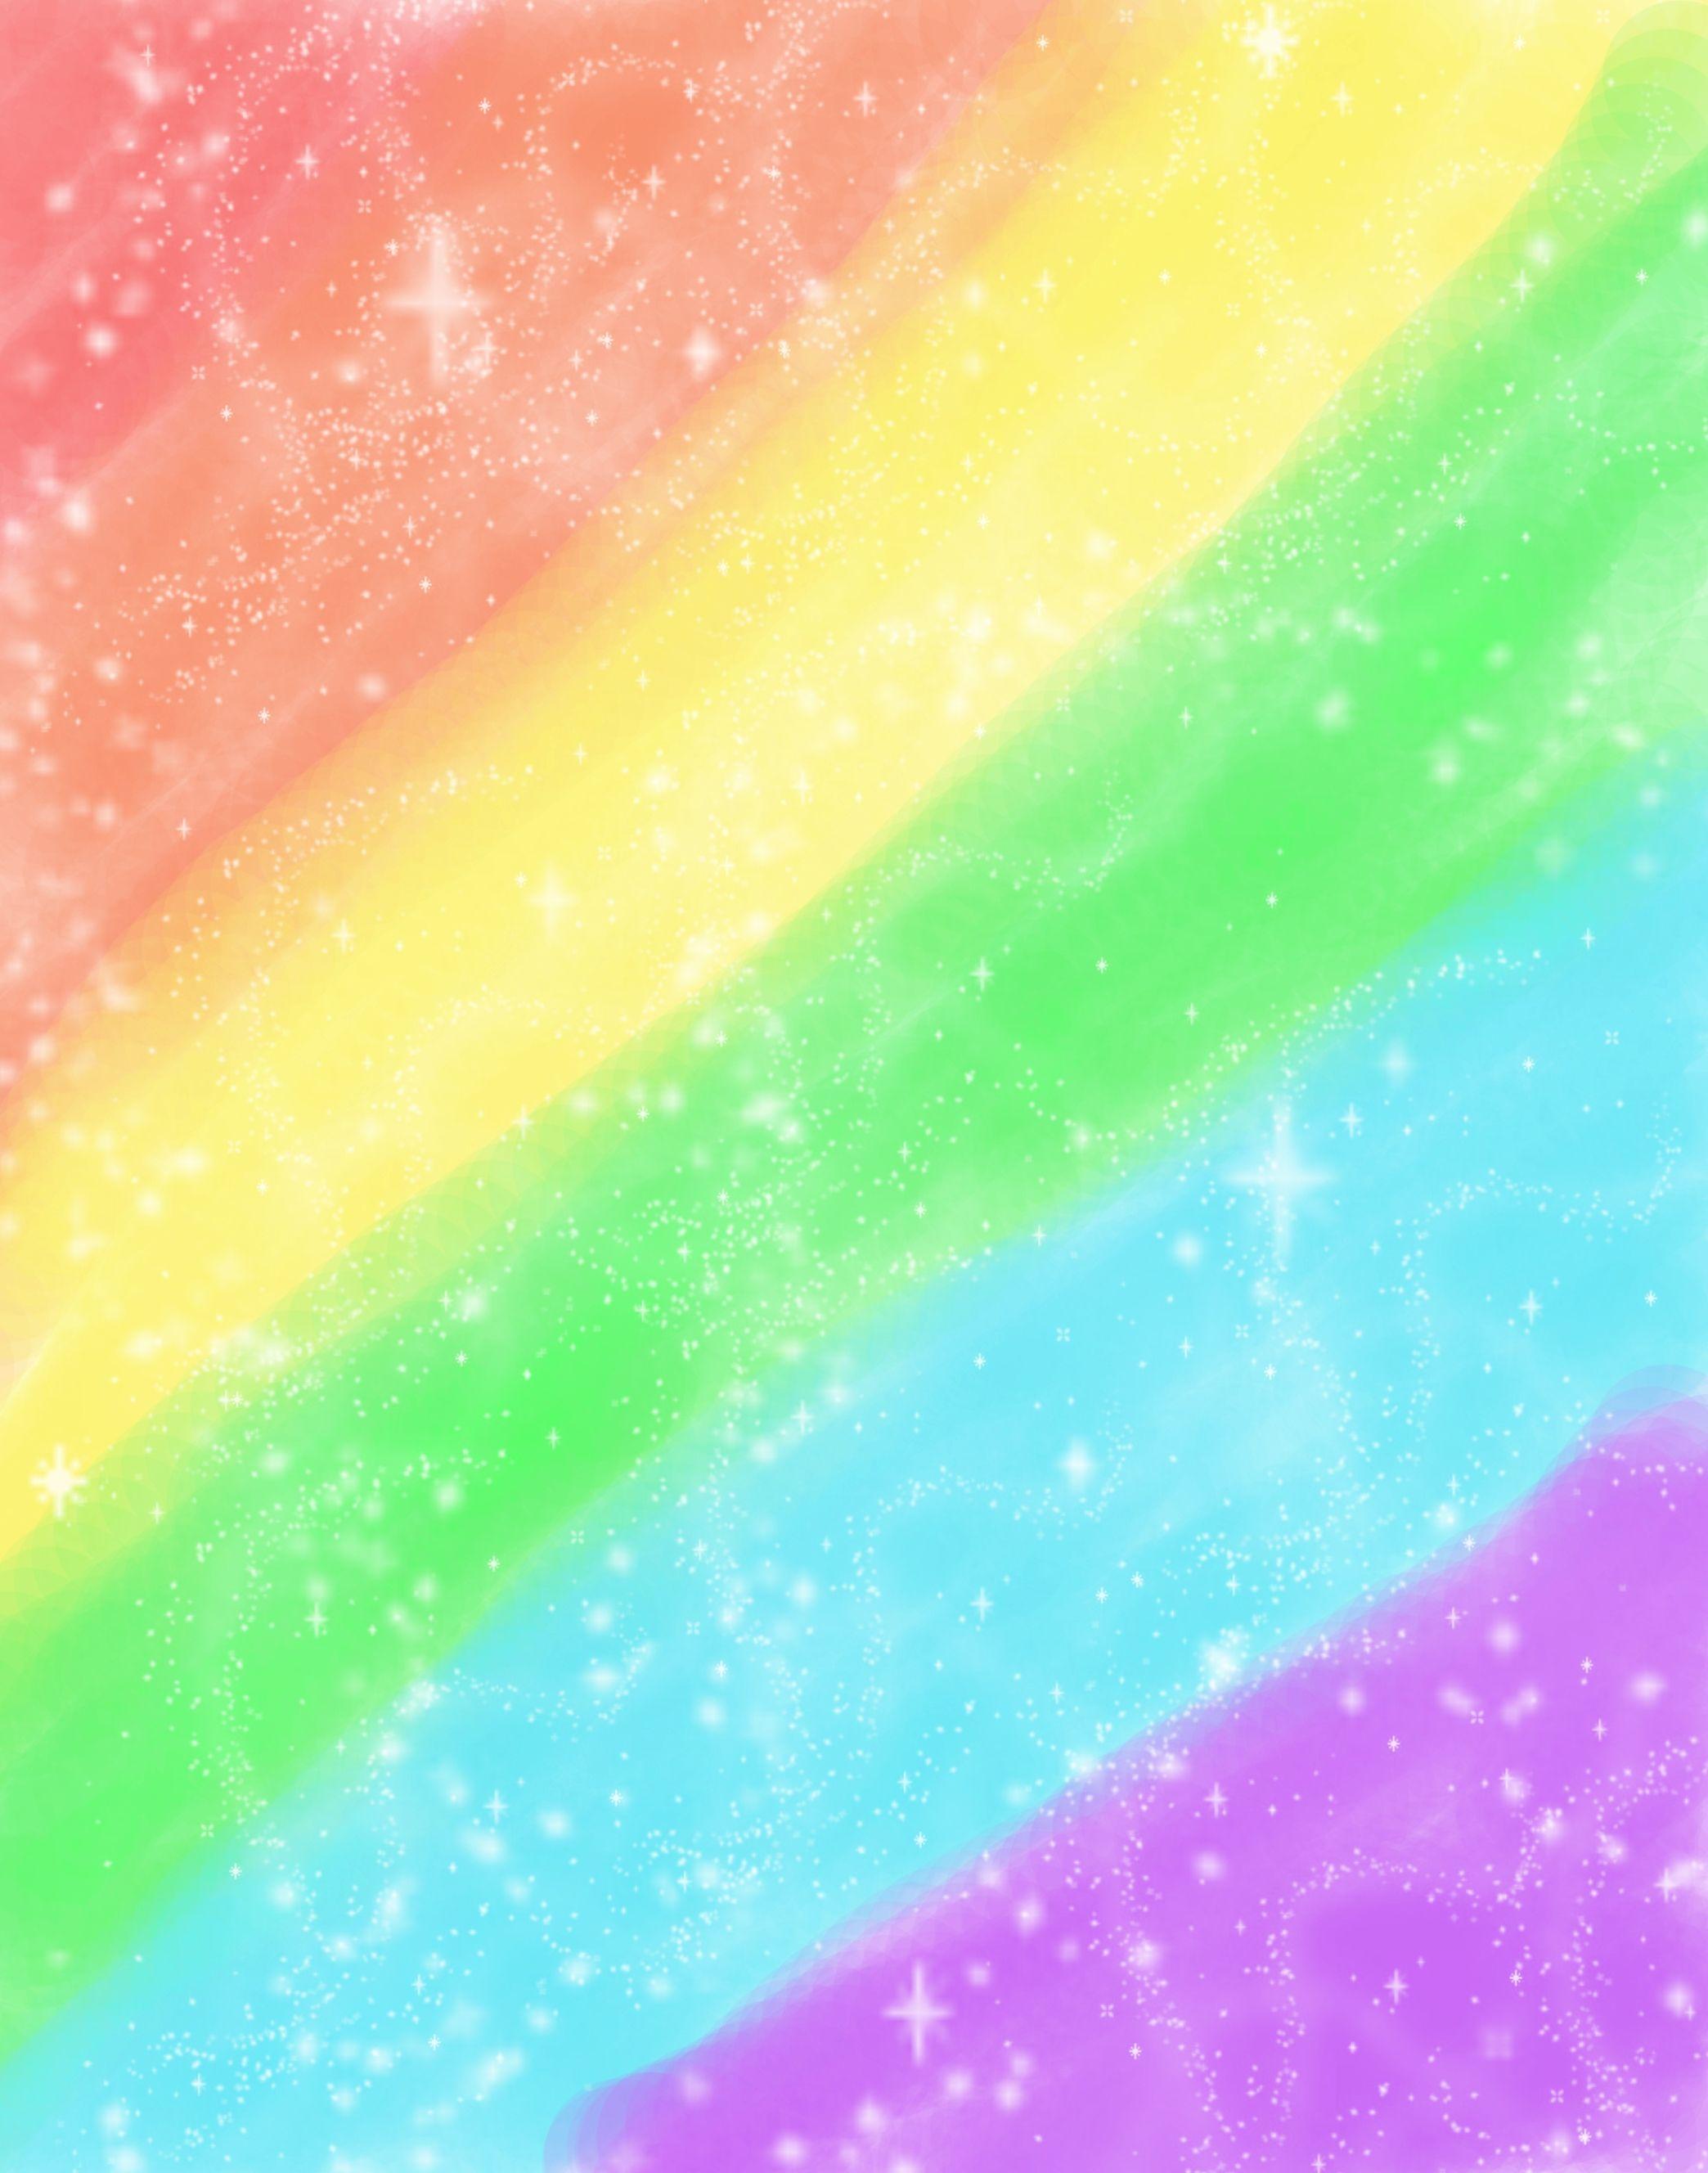 47+] Pastel Rainbow Wallpaper - WallpaperSafari